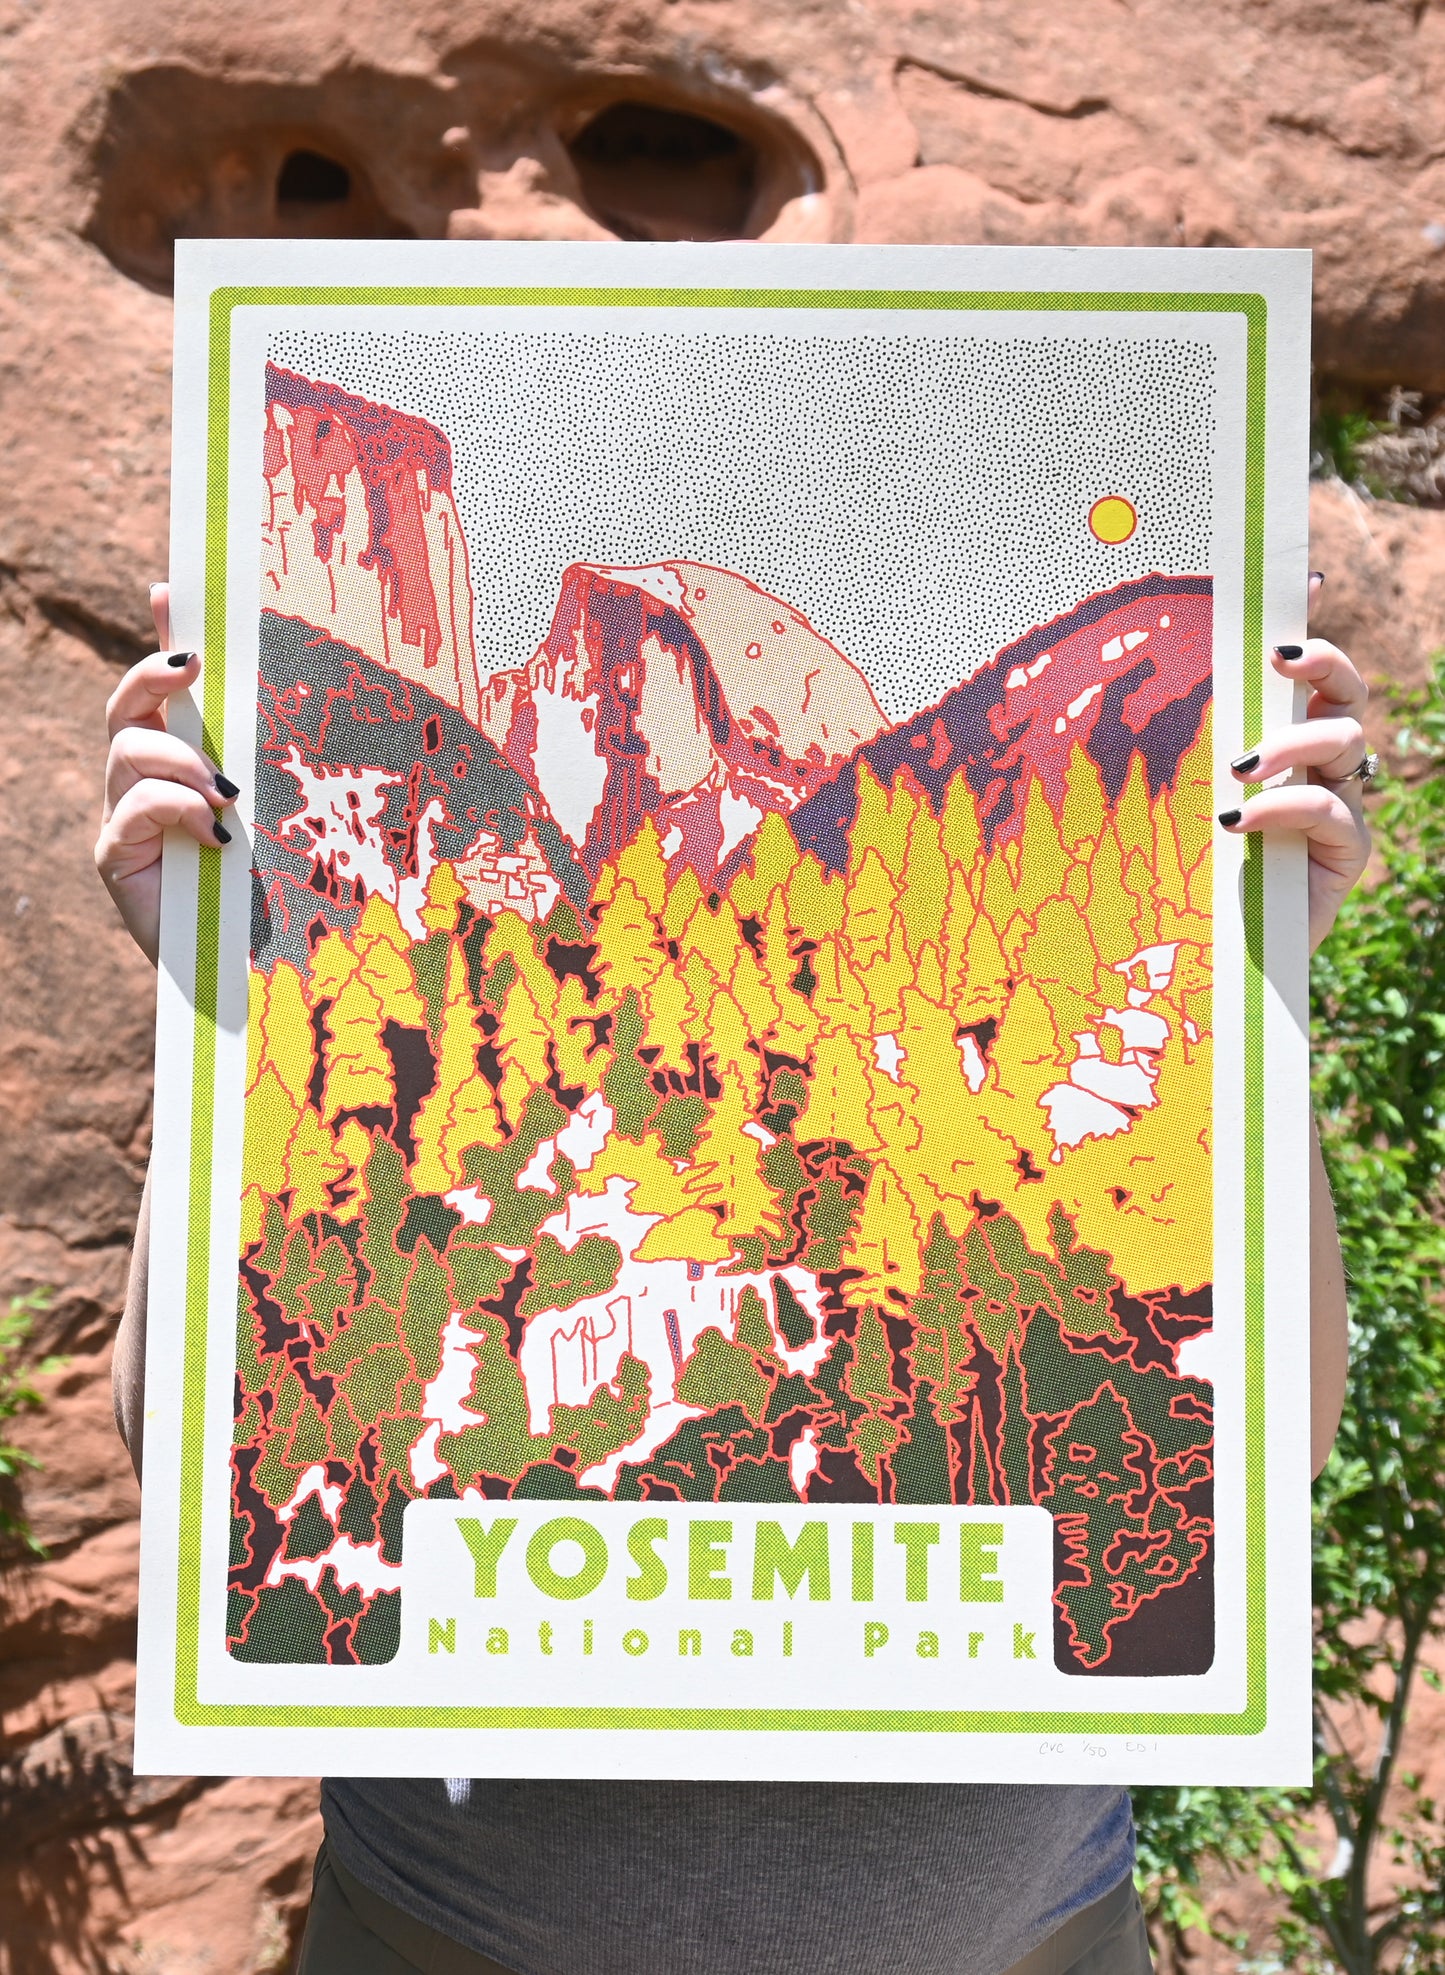 Yosemite National Park 18"x24" Screen Print